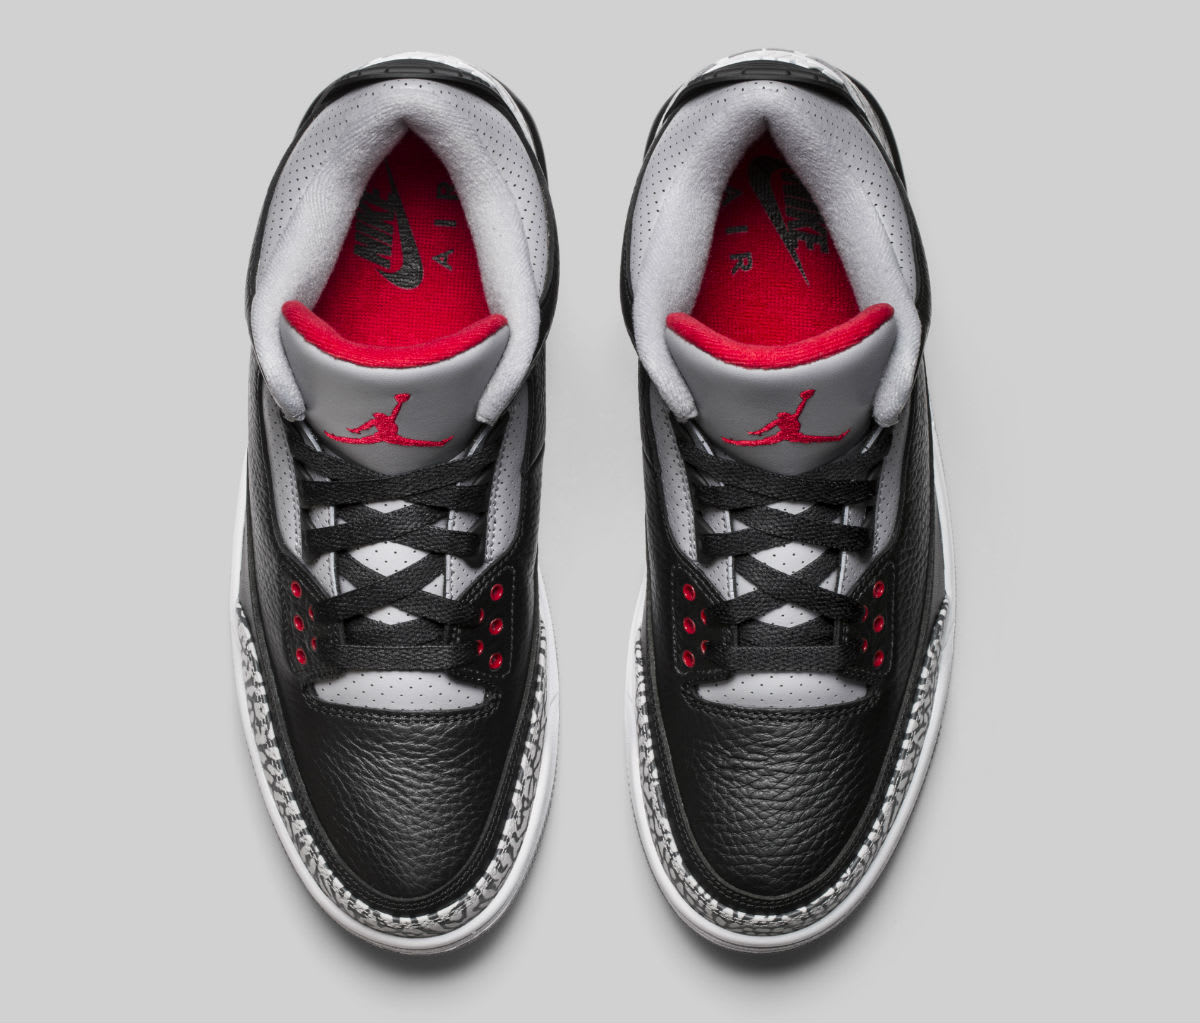 Air Jordan 3 III Black Cement Release Date 854262-001 Top